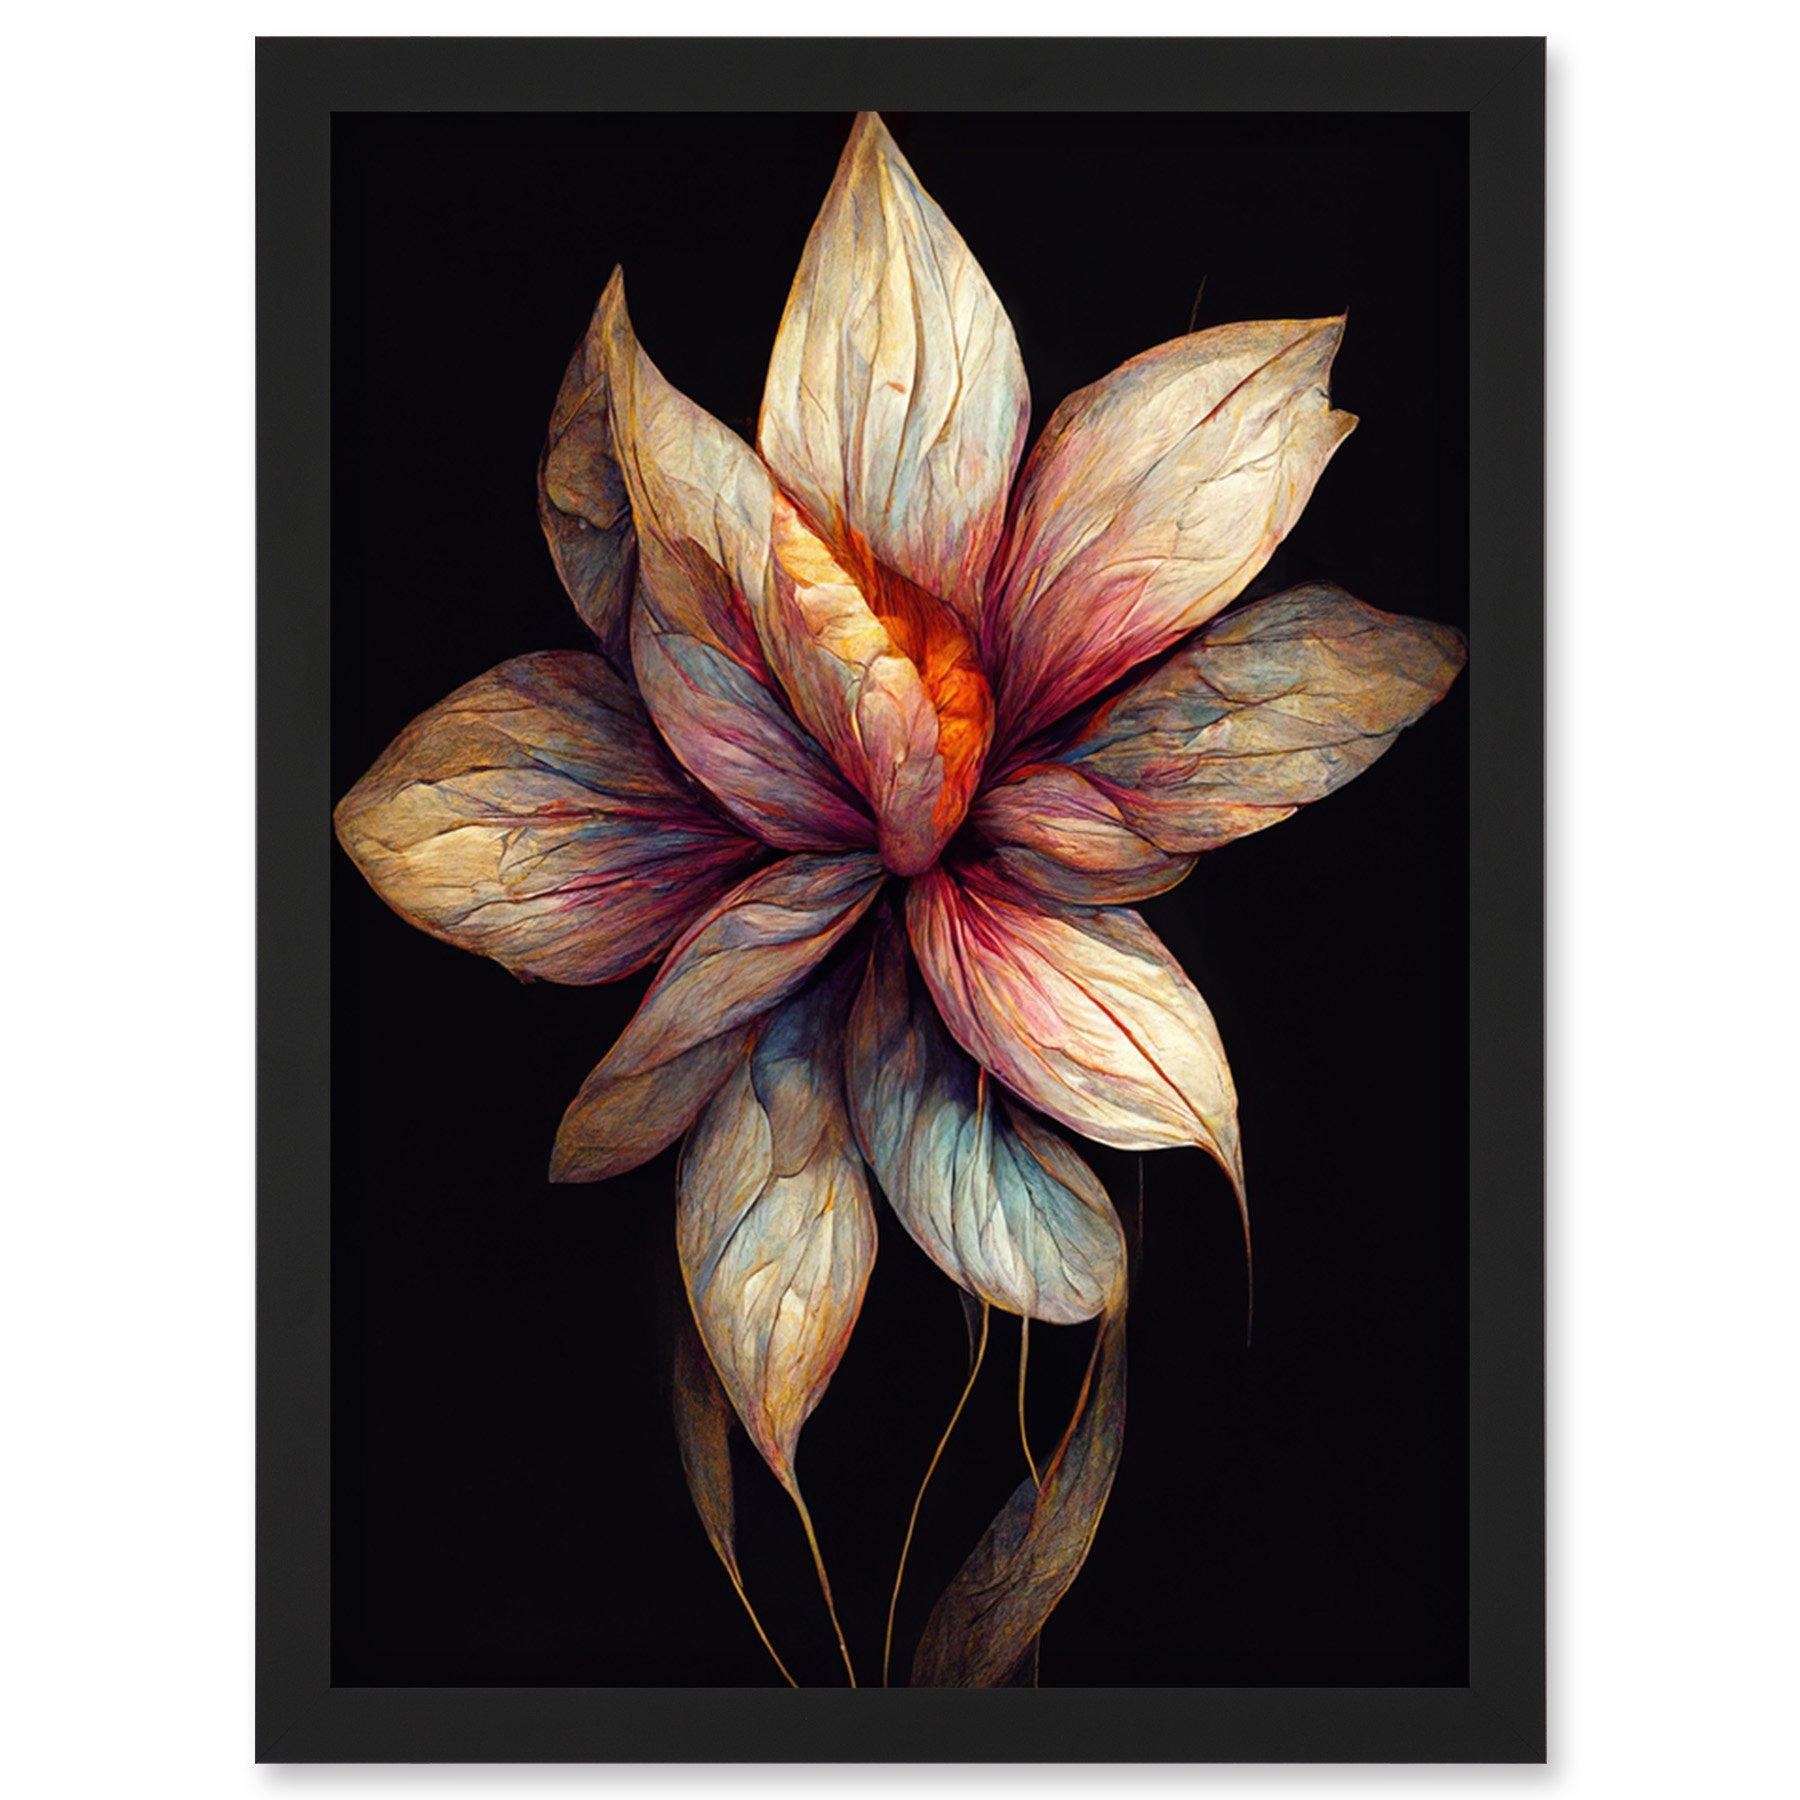 Floral Abstract Botanical On Black Background Artwork Framed Wall Art Print A4 - image 1